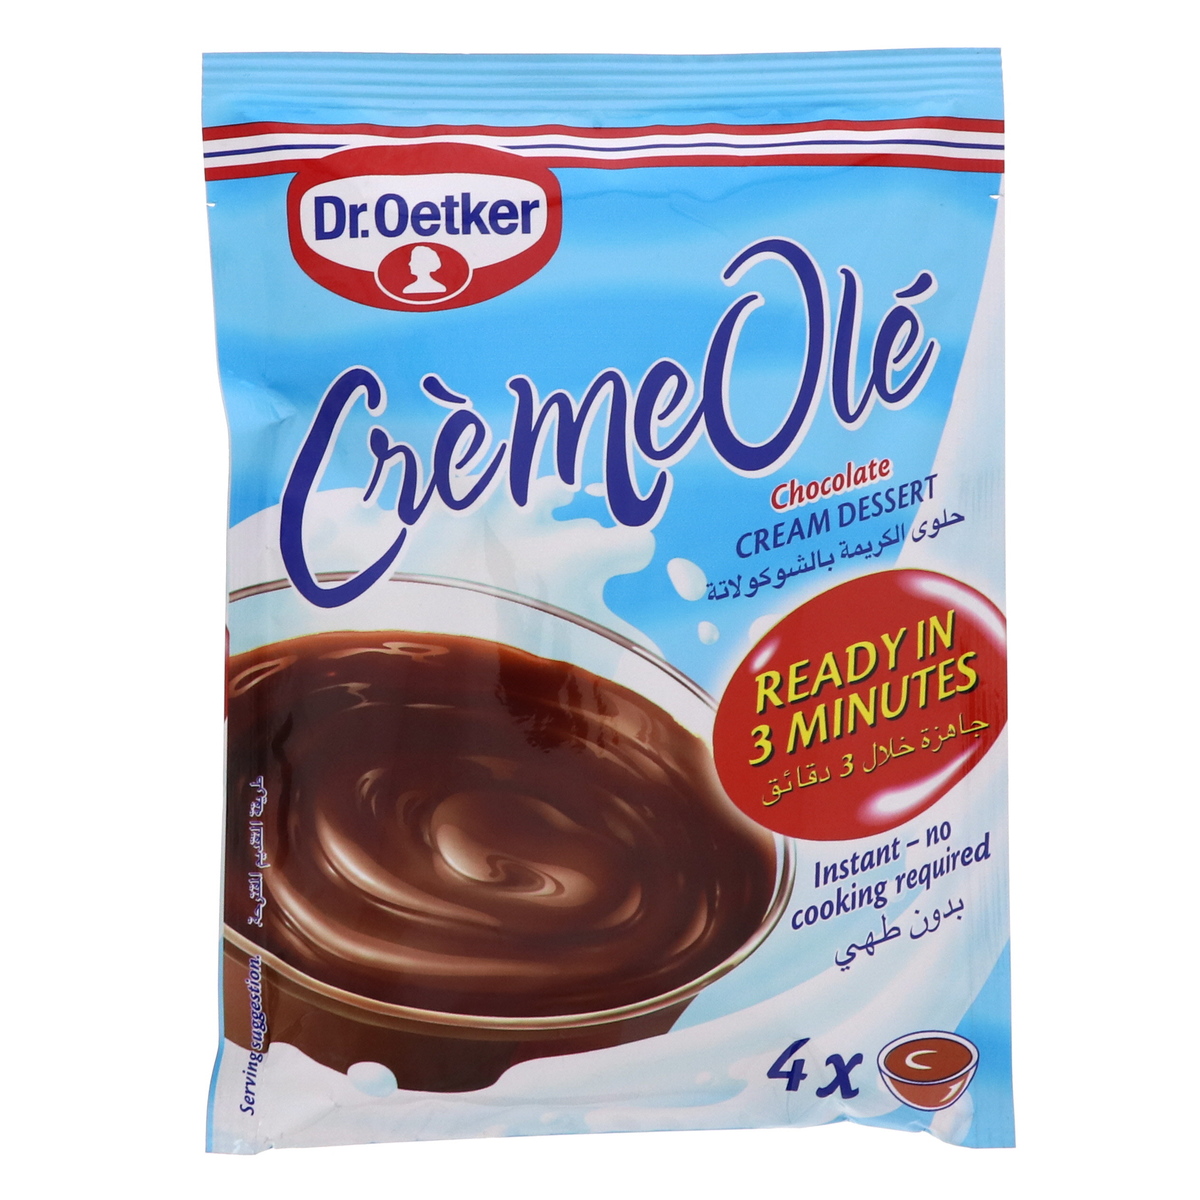 Dr. Oetker CremeOle Chocolate Cream Dessert 125g